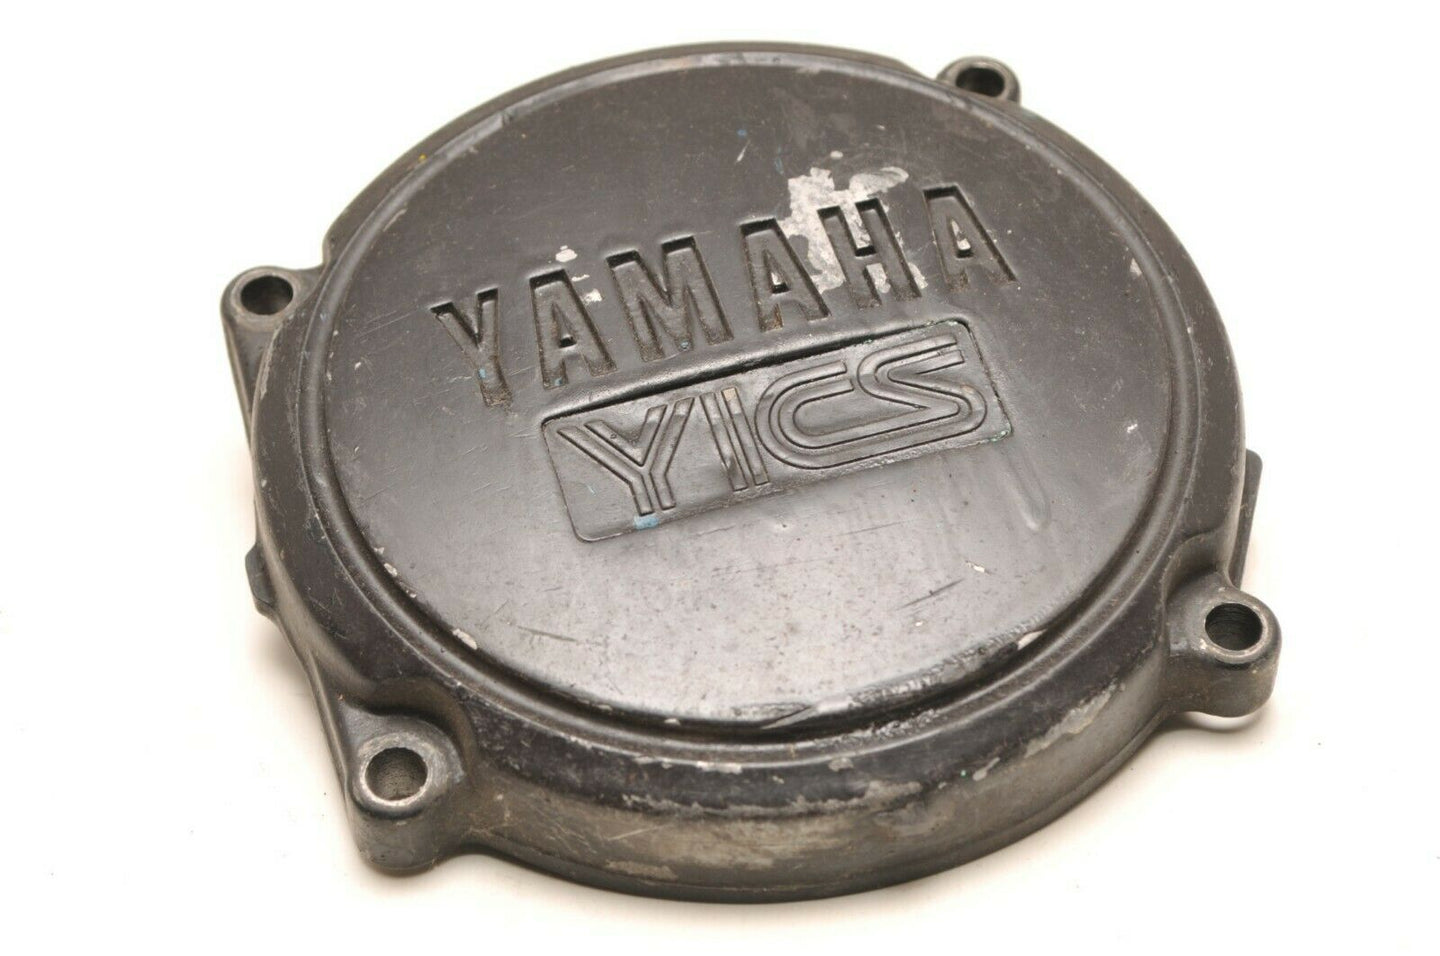 OEM Yamaha 4U8-15416-01 Seca LH Oil Pump Cover YICS 1982 #1 painted black 81-83